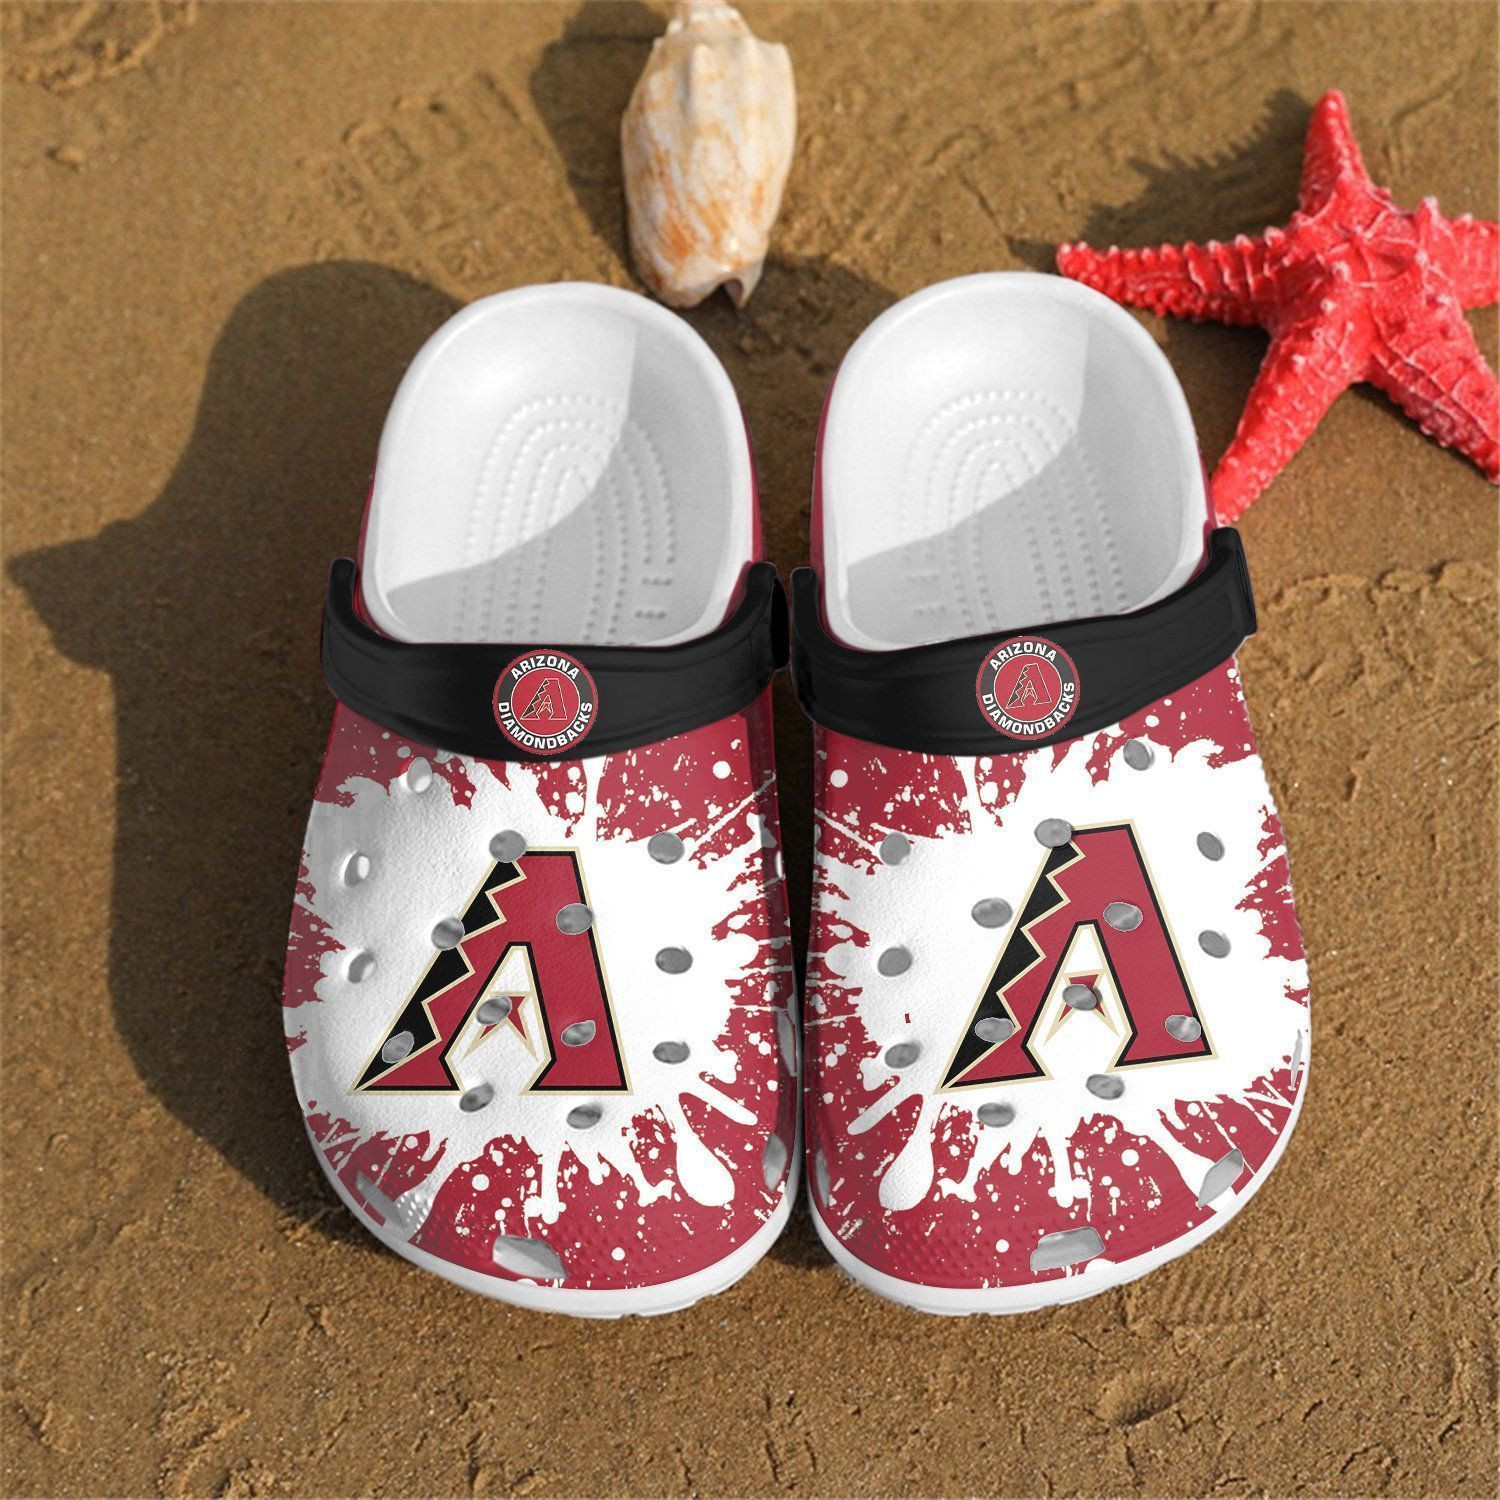 Arizona Diamondbacks Mlb Gift For Fan Crocs Clog Shoescrocband Clogs Comfy Foot